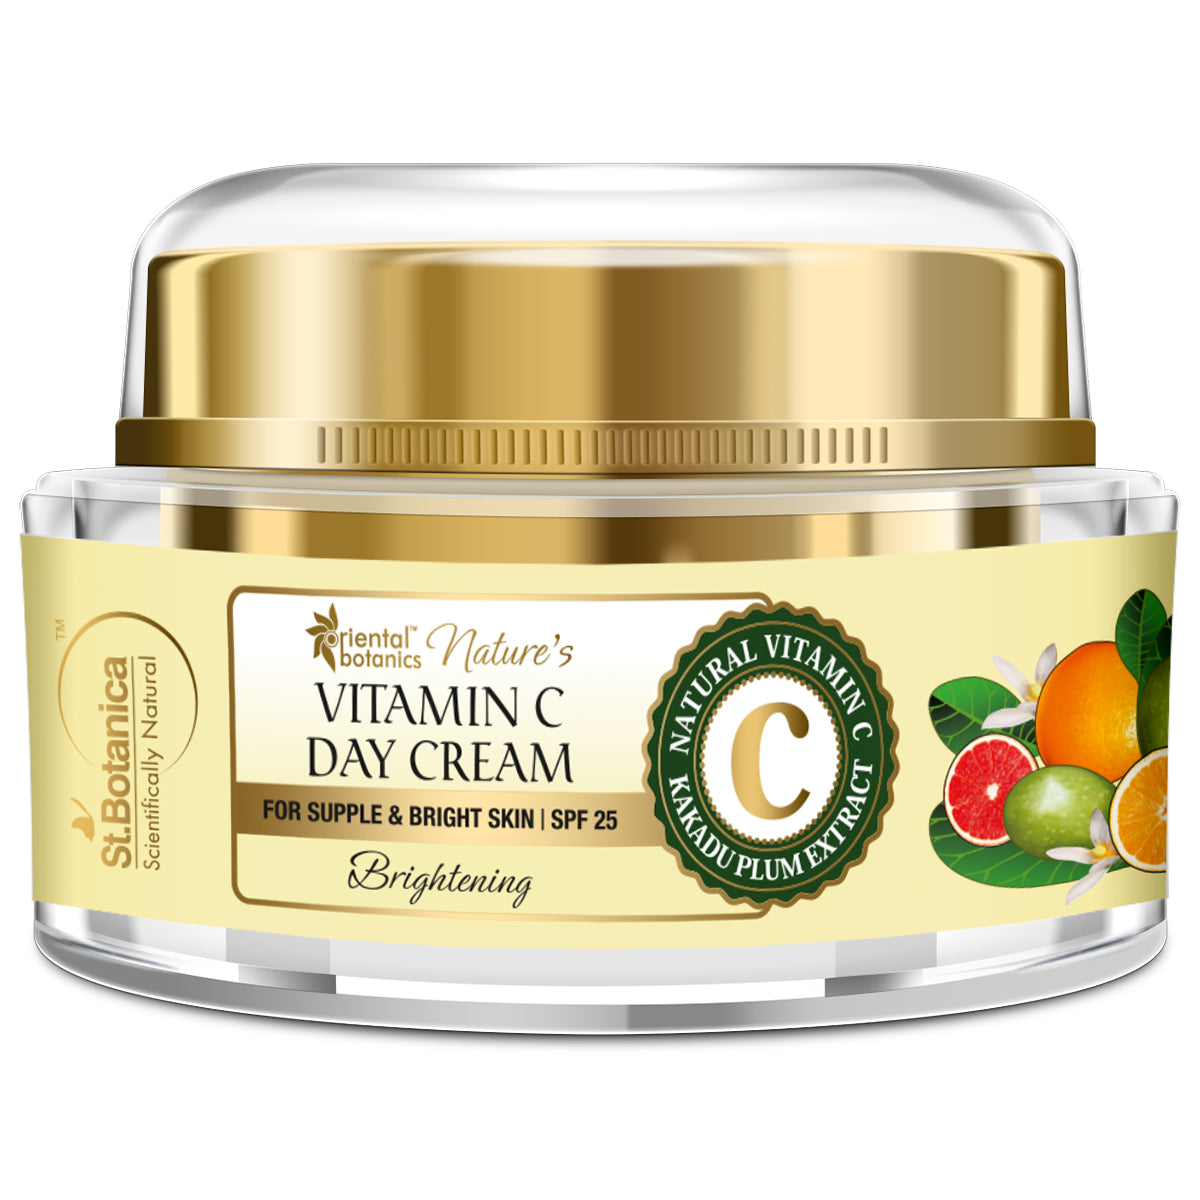 Oriental Botanics Nature's Vitamin C Face Brightening Day Cream Spf 25 - With Kakadu Plum - For Supple and Bright Skin, 50 g